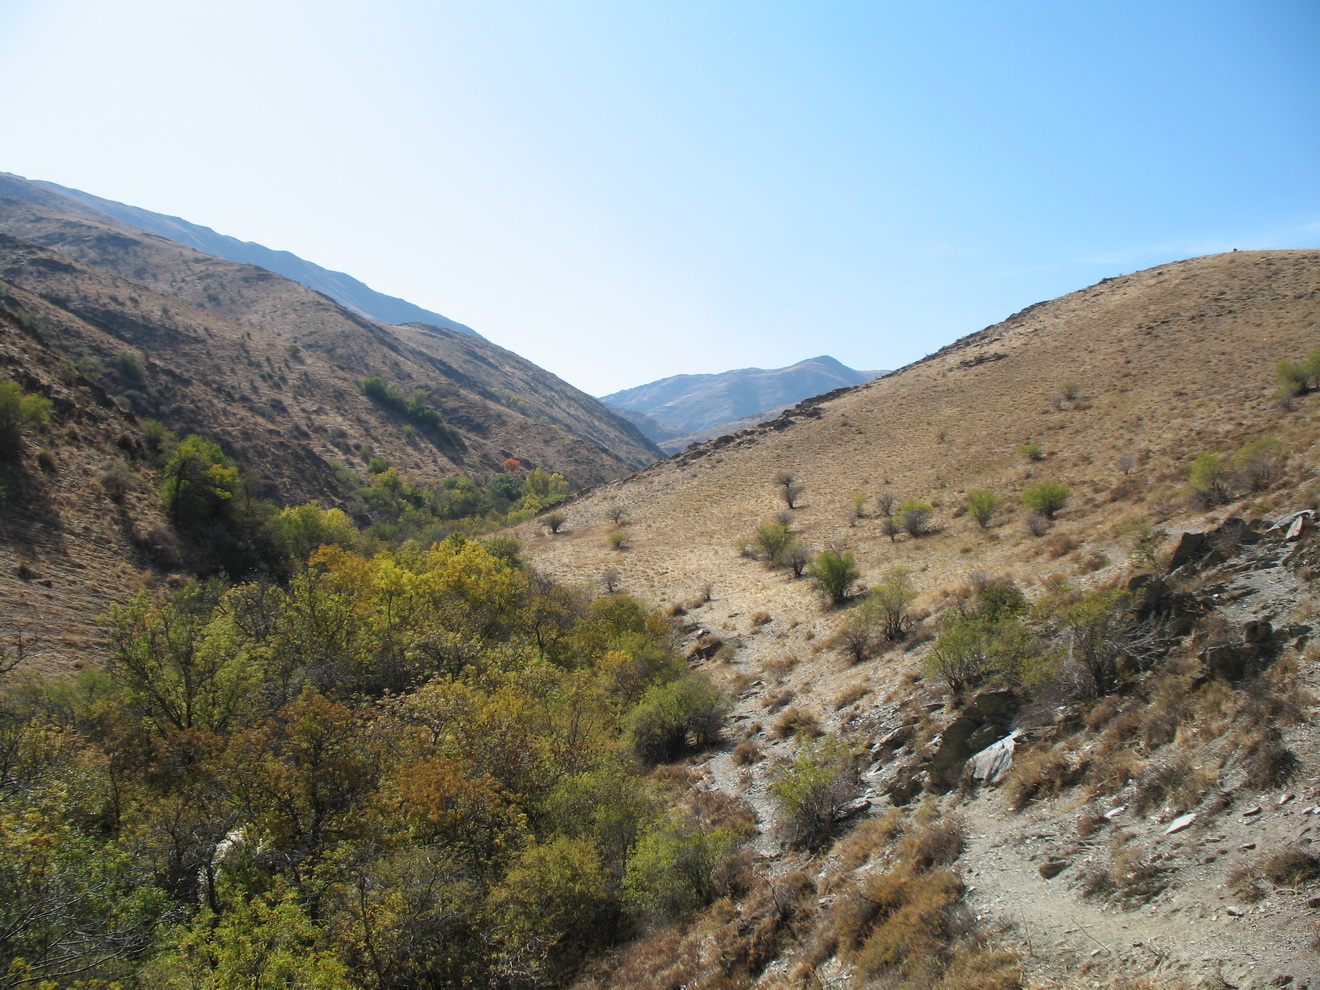 Беркара, image of landscape/habitat.